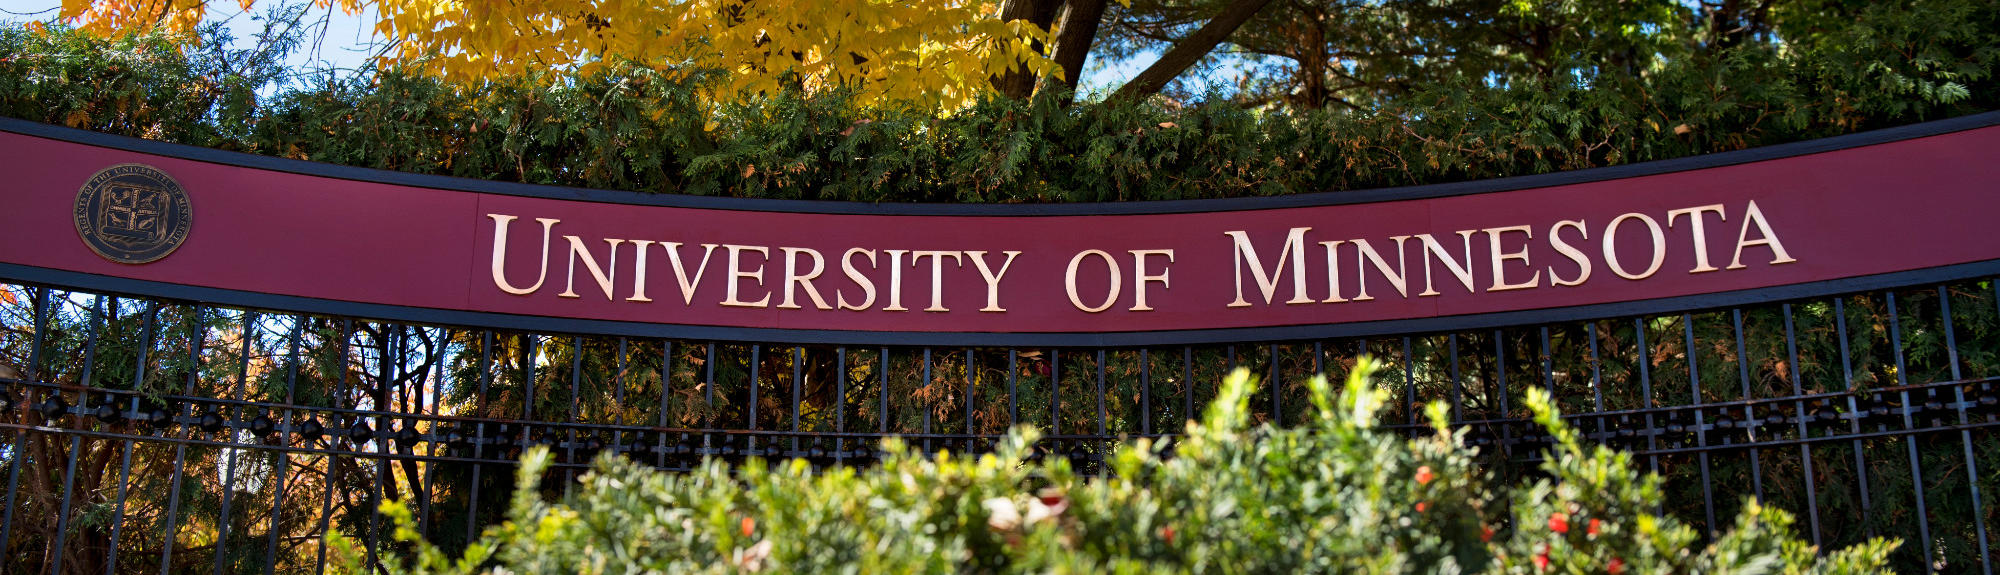 University of Minnesota sign